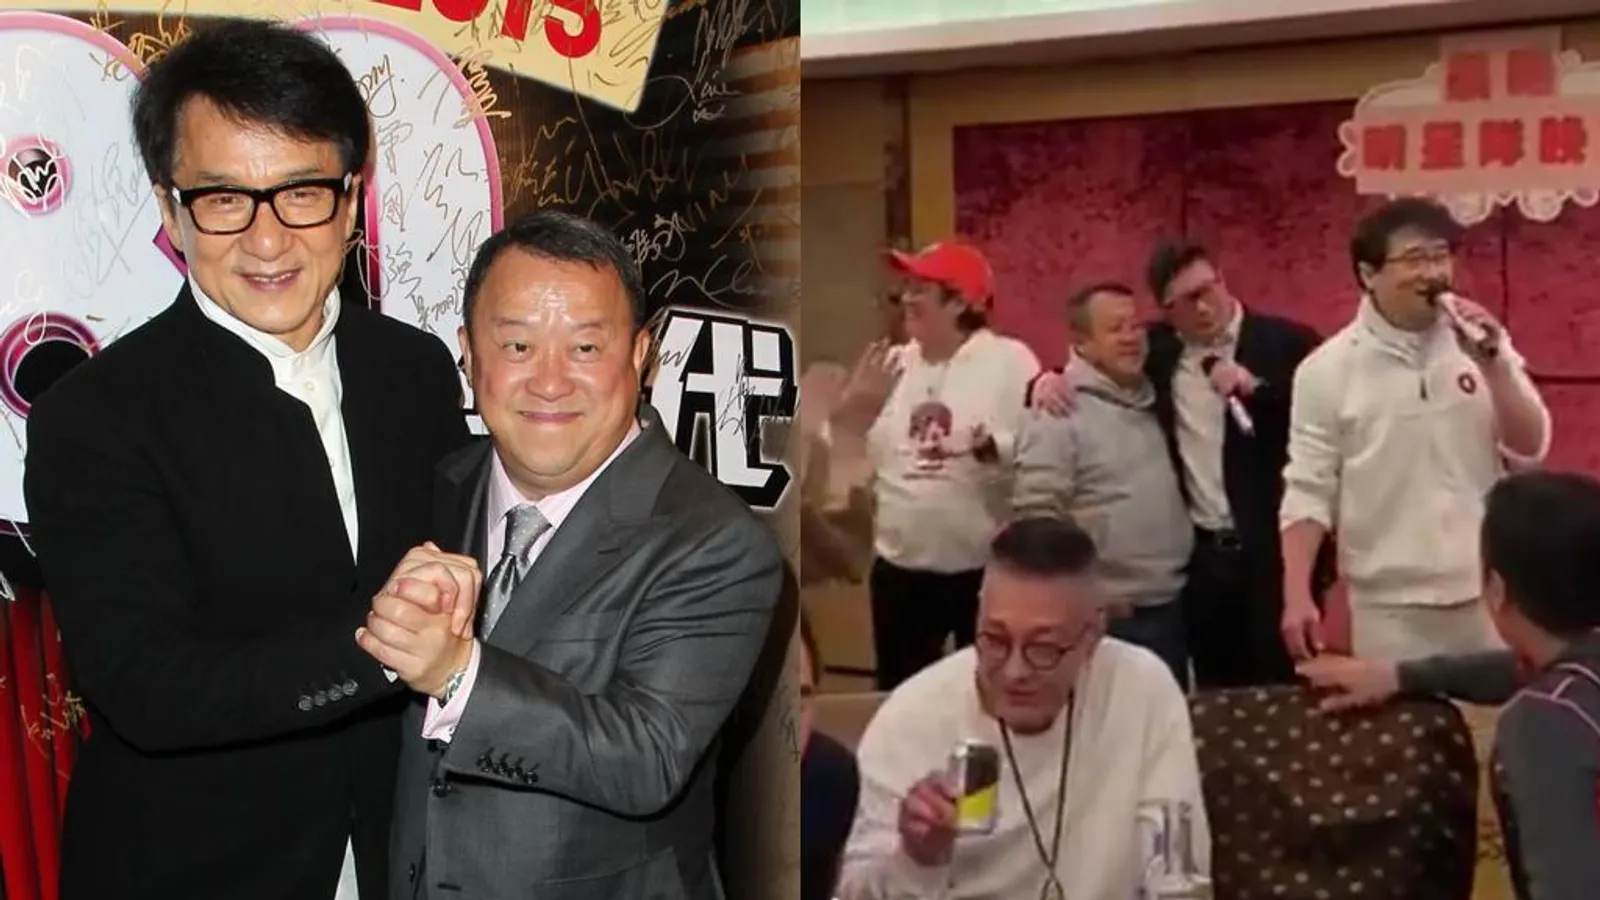 Datang ke Pesta, Jackie Chan Diduga Tertular Virus Corona